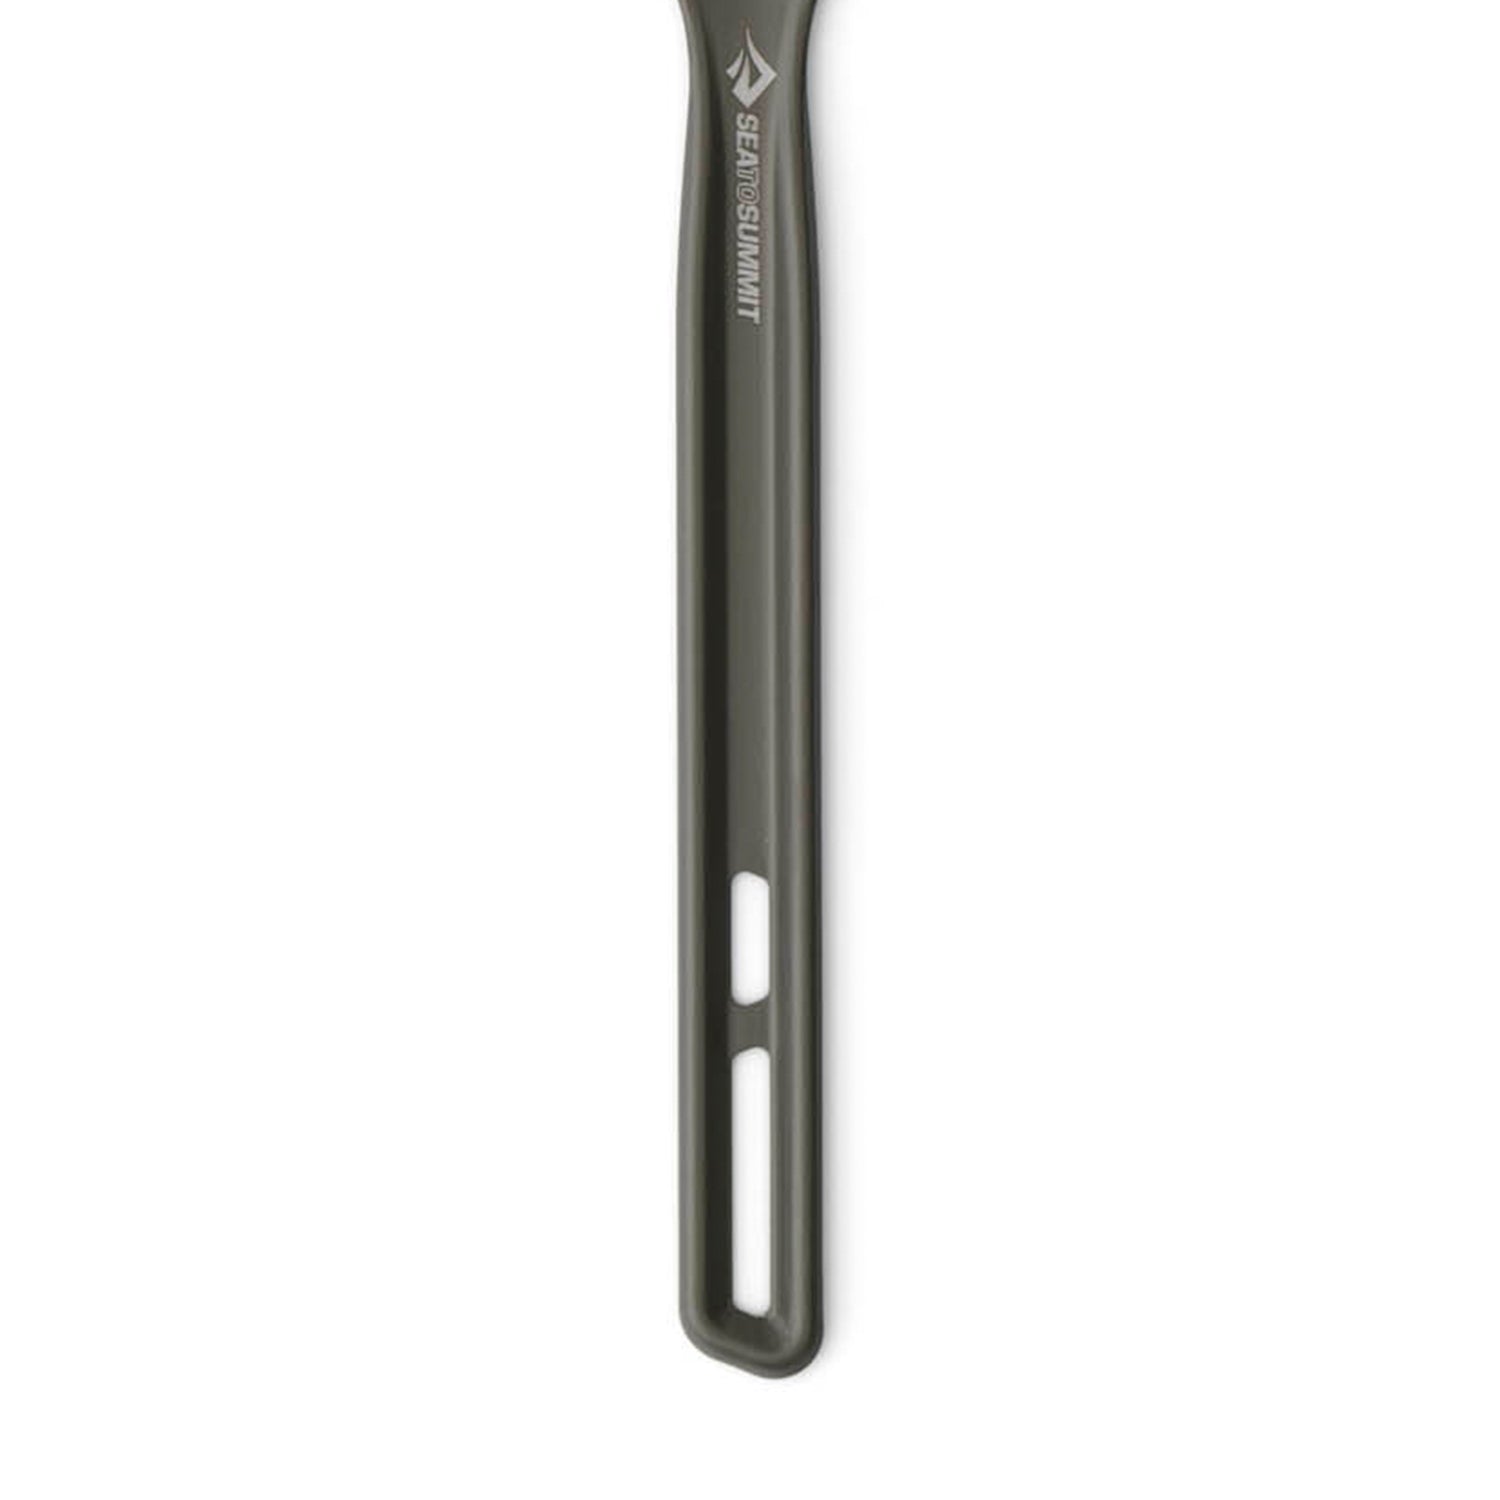 Frontier Ultralight Spoon - Long Handle